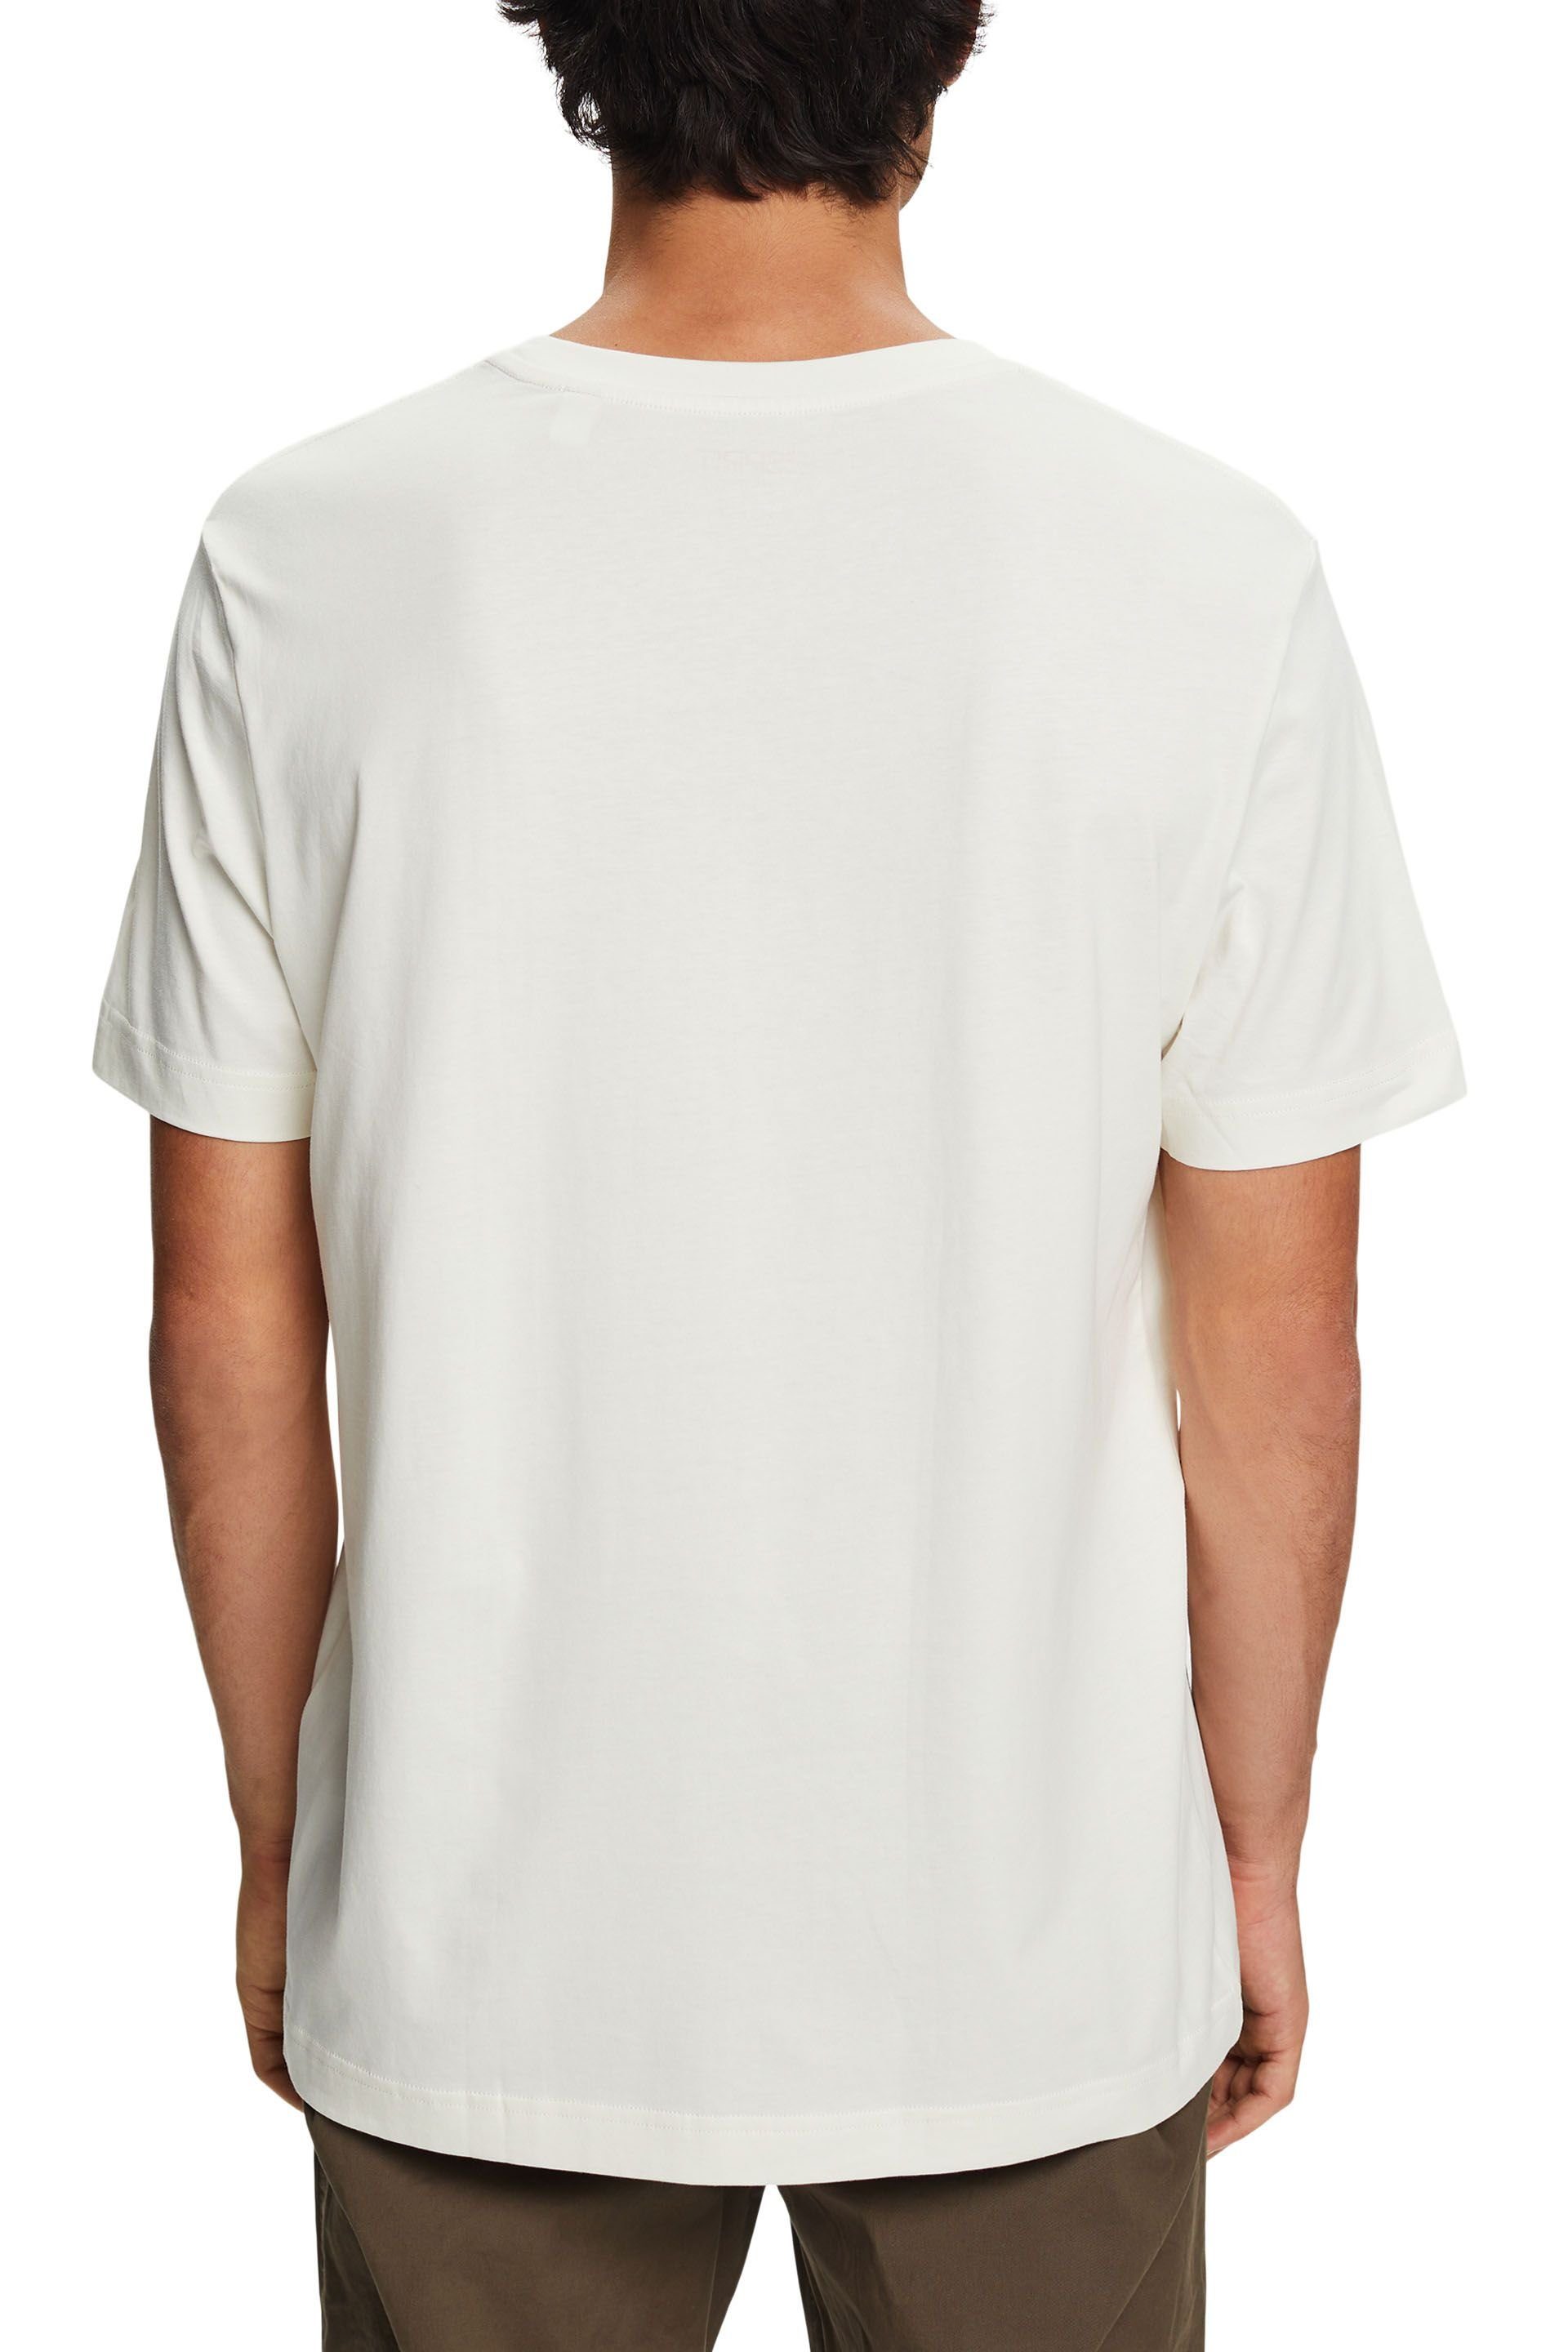 Esprit ice T-Shirt